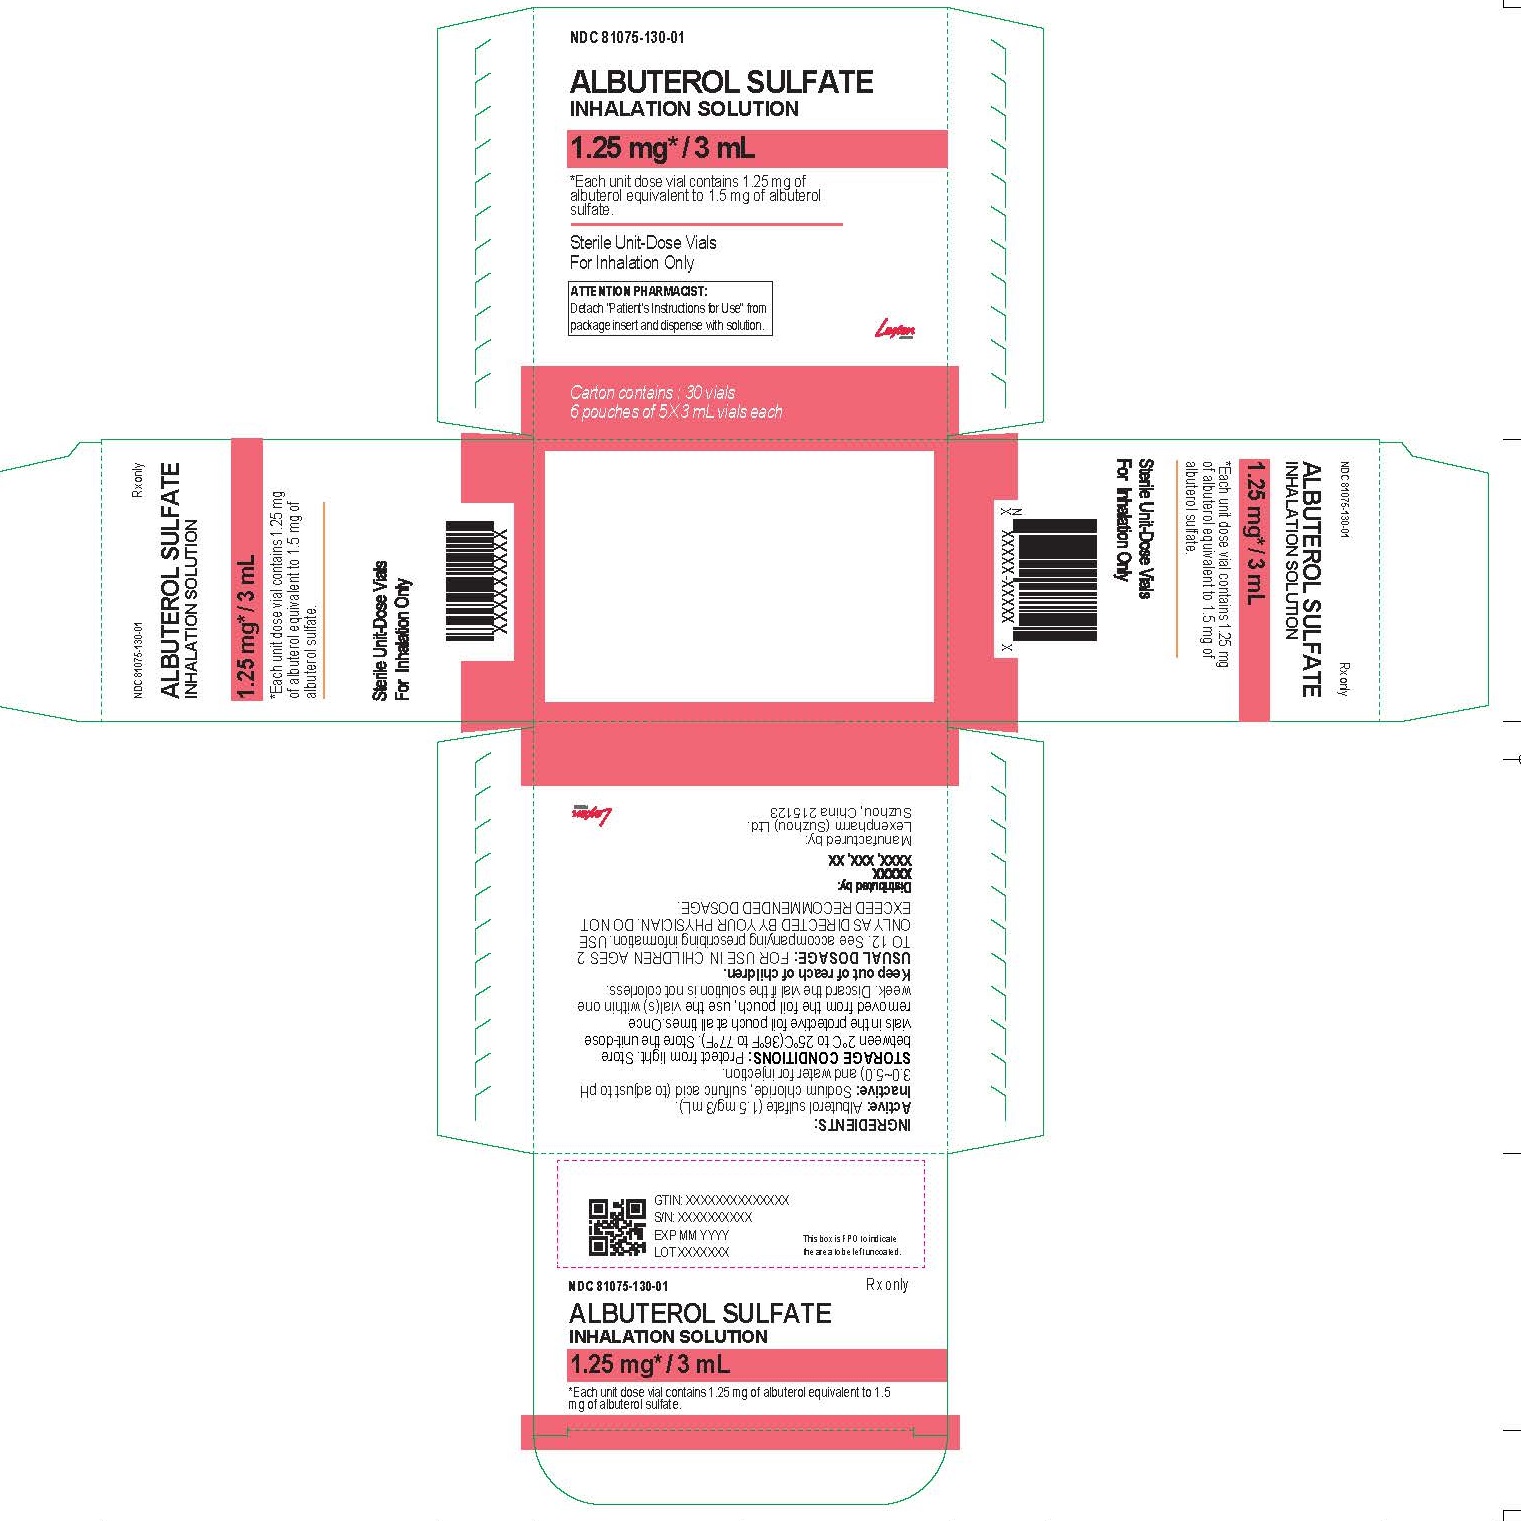 Albuterol Sulfate Inhalation Solution,1.25 mg/3 mL-Carton Label